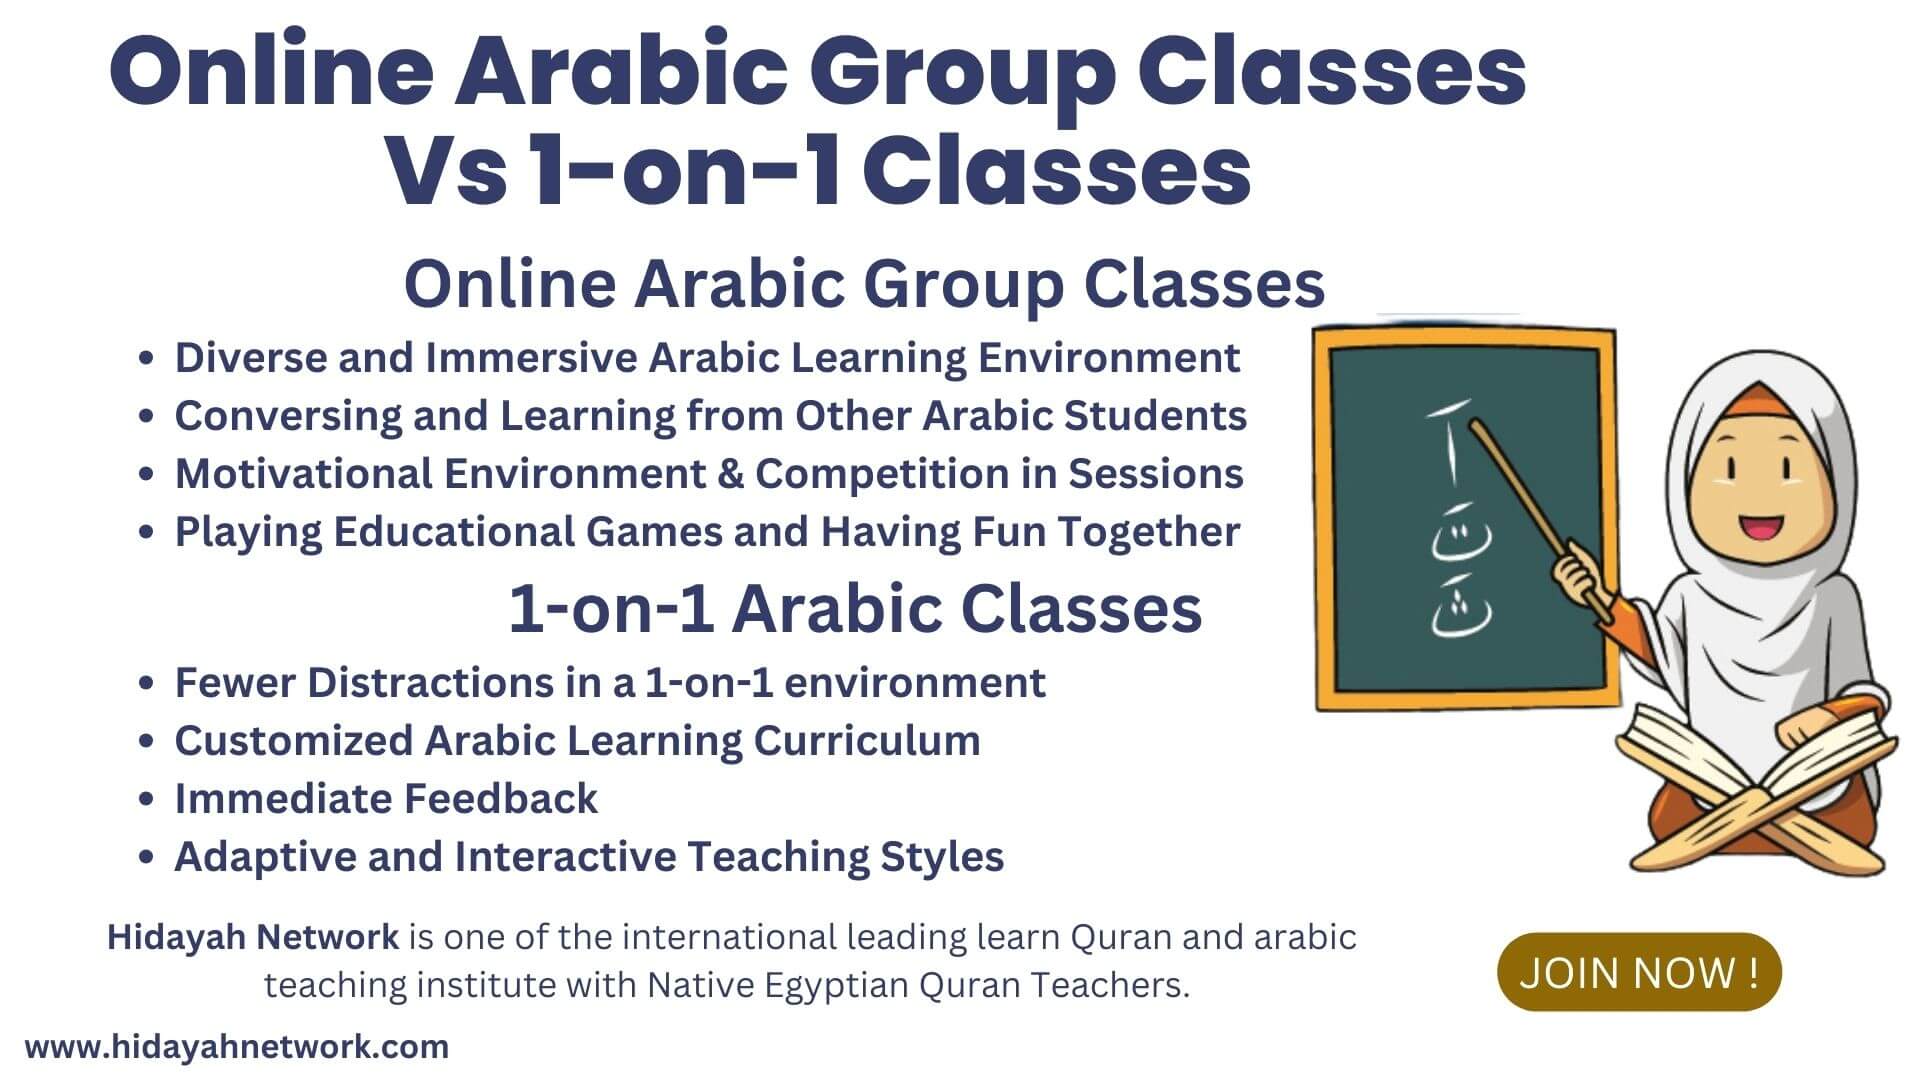 Online Arabic Group Classes Vs 1-on-1 Classes